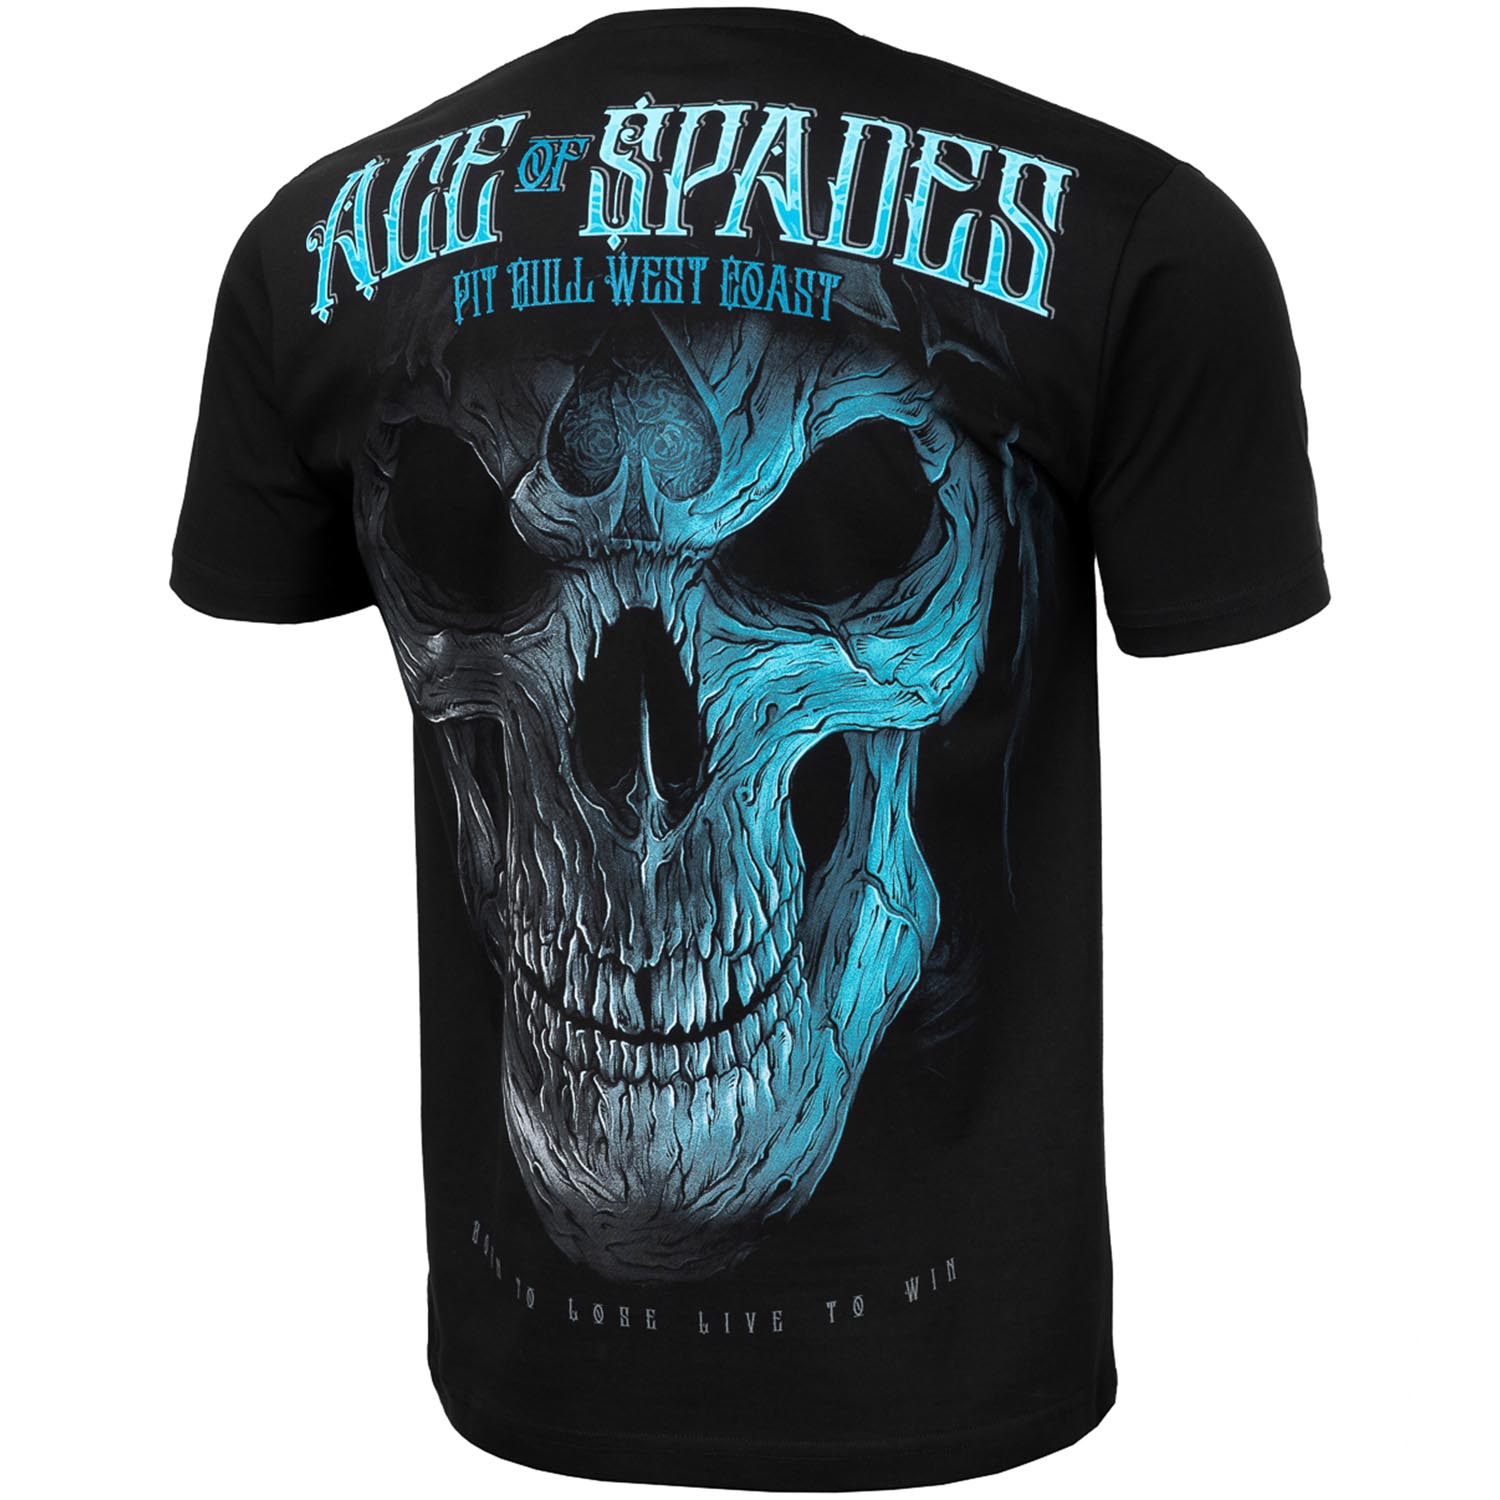 Pit Bull West Coast T-Shirt, Blue Skull, schwarz